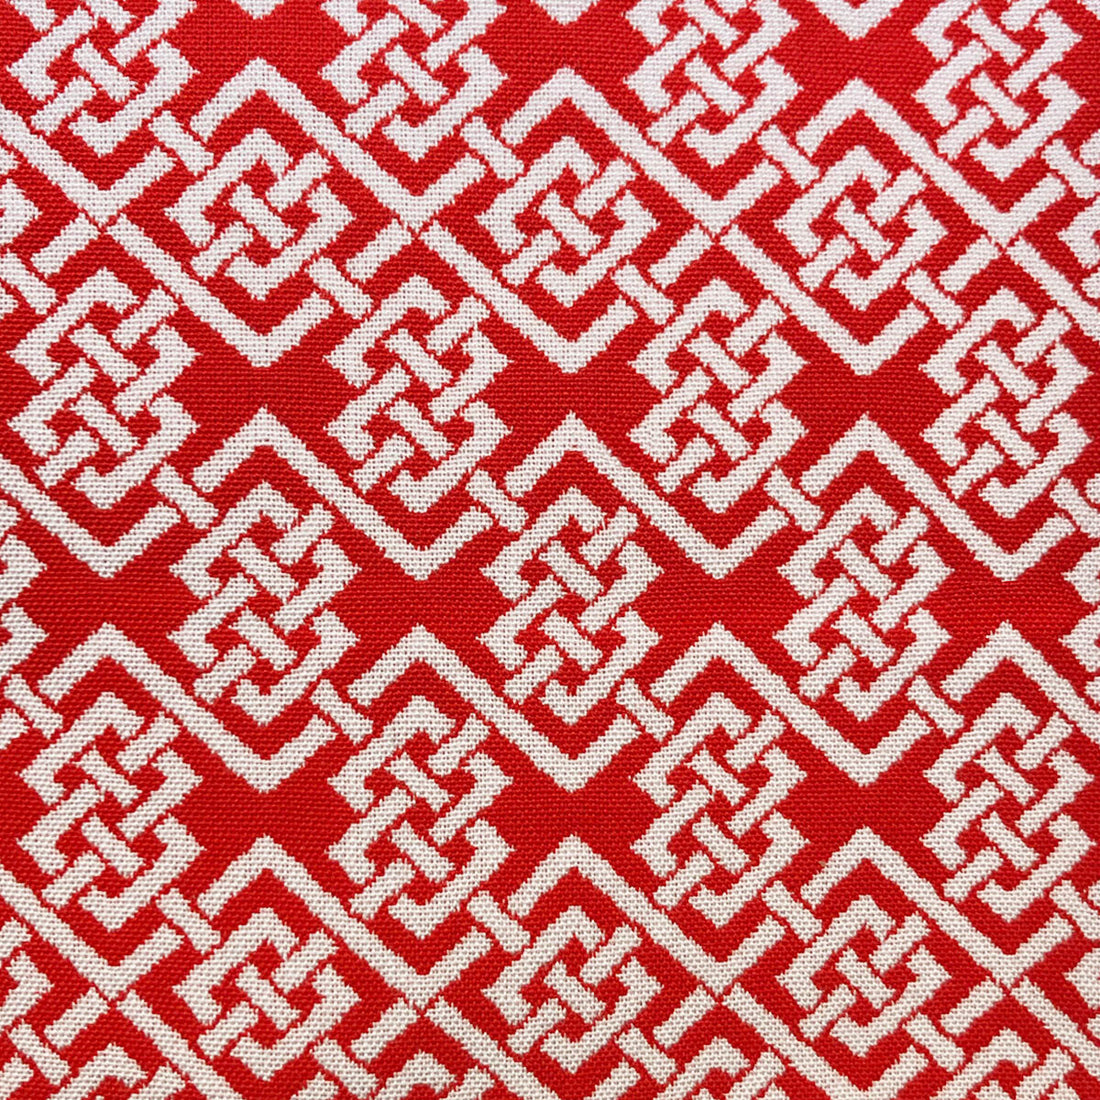 Ephraim fabric in rojo color - pattern LCT1055.005.0 - by Gaston y Daniela in the Lorenzo Castillo VI collection